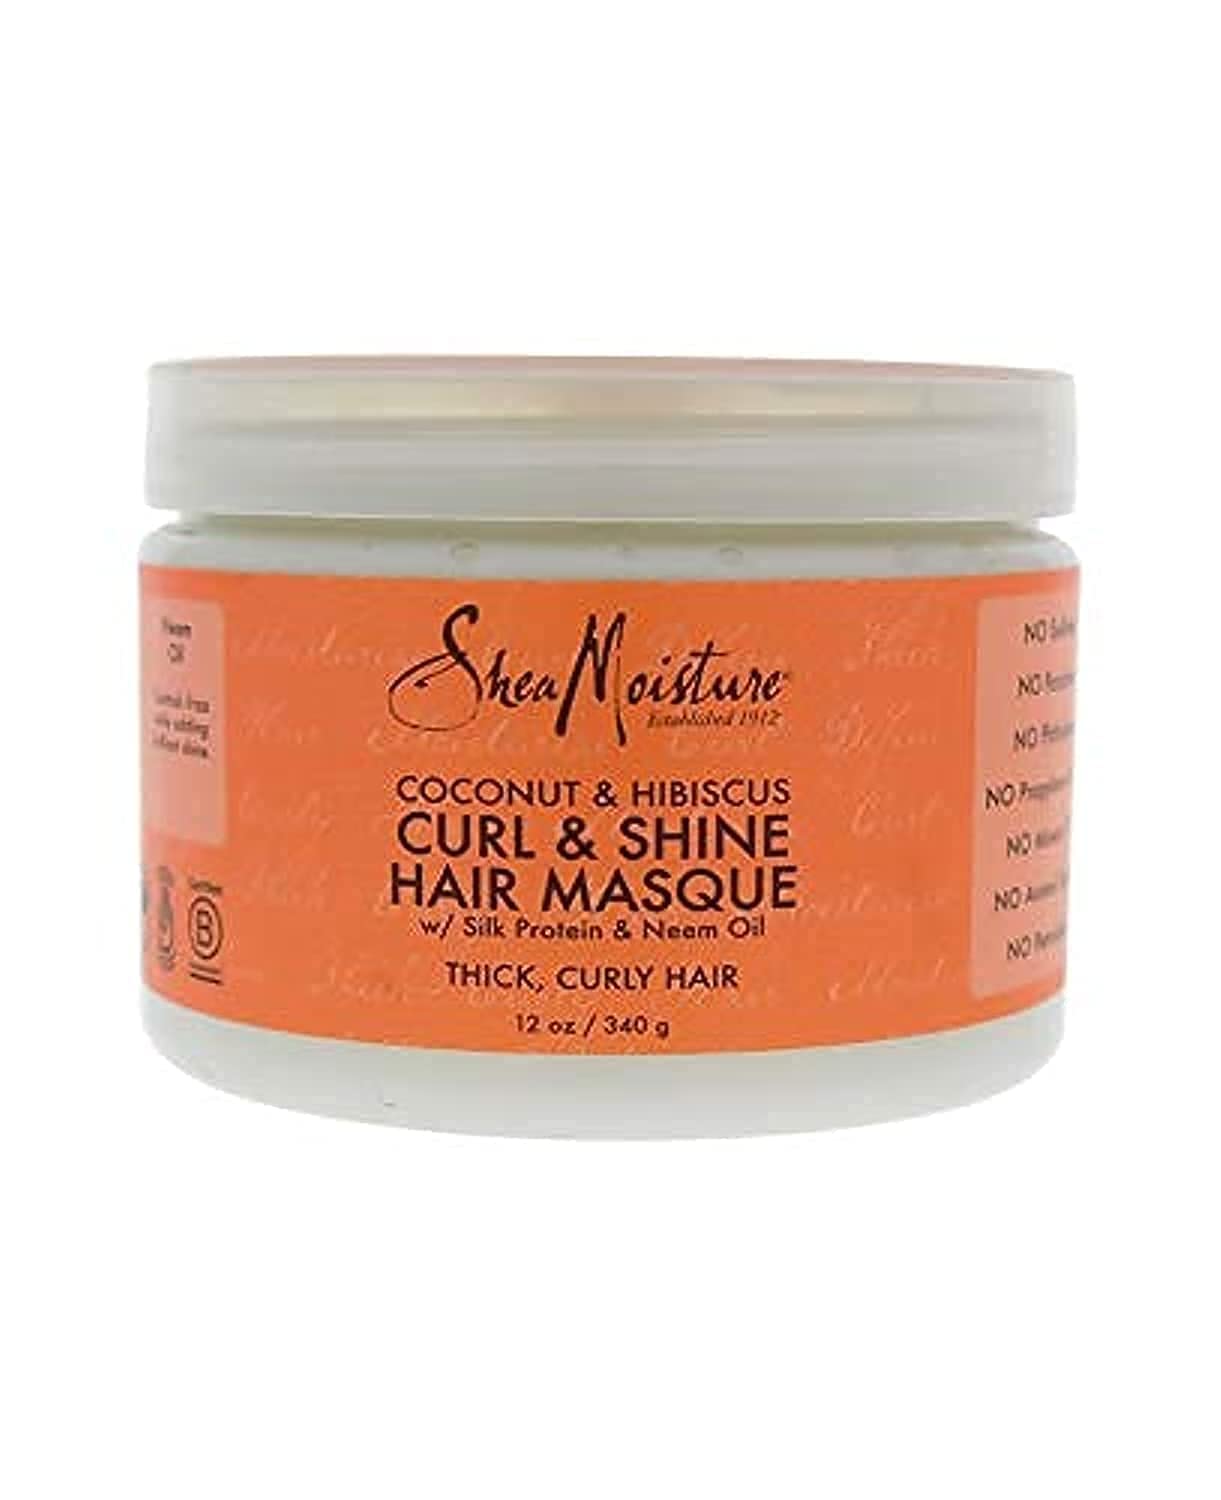 SheaMoisture Curl & Shine Hair Masque with Silk Protein & Neem Oil, Coconut & Hibiscus, 11.5 oz